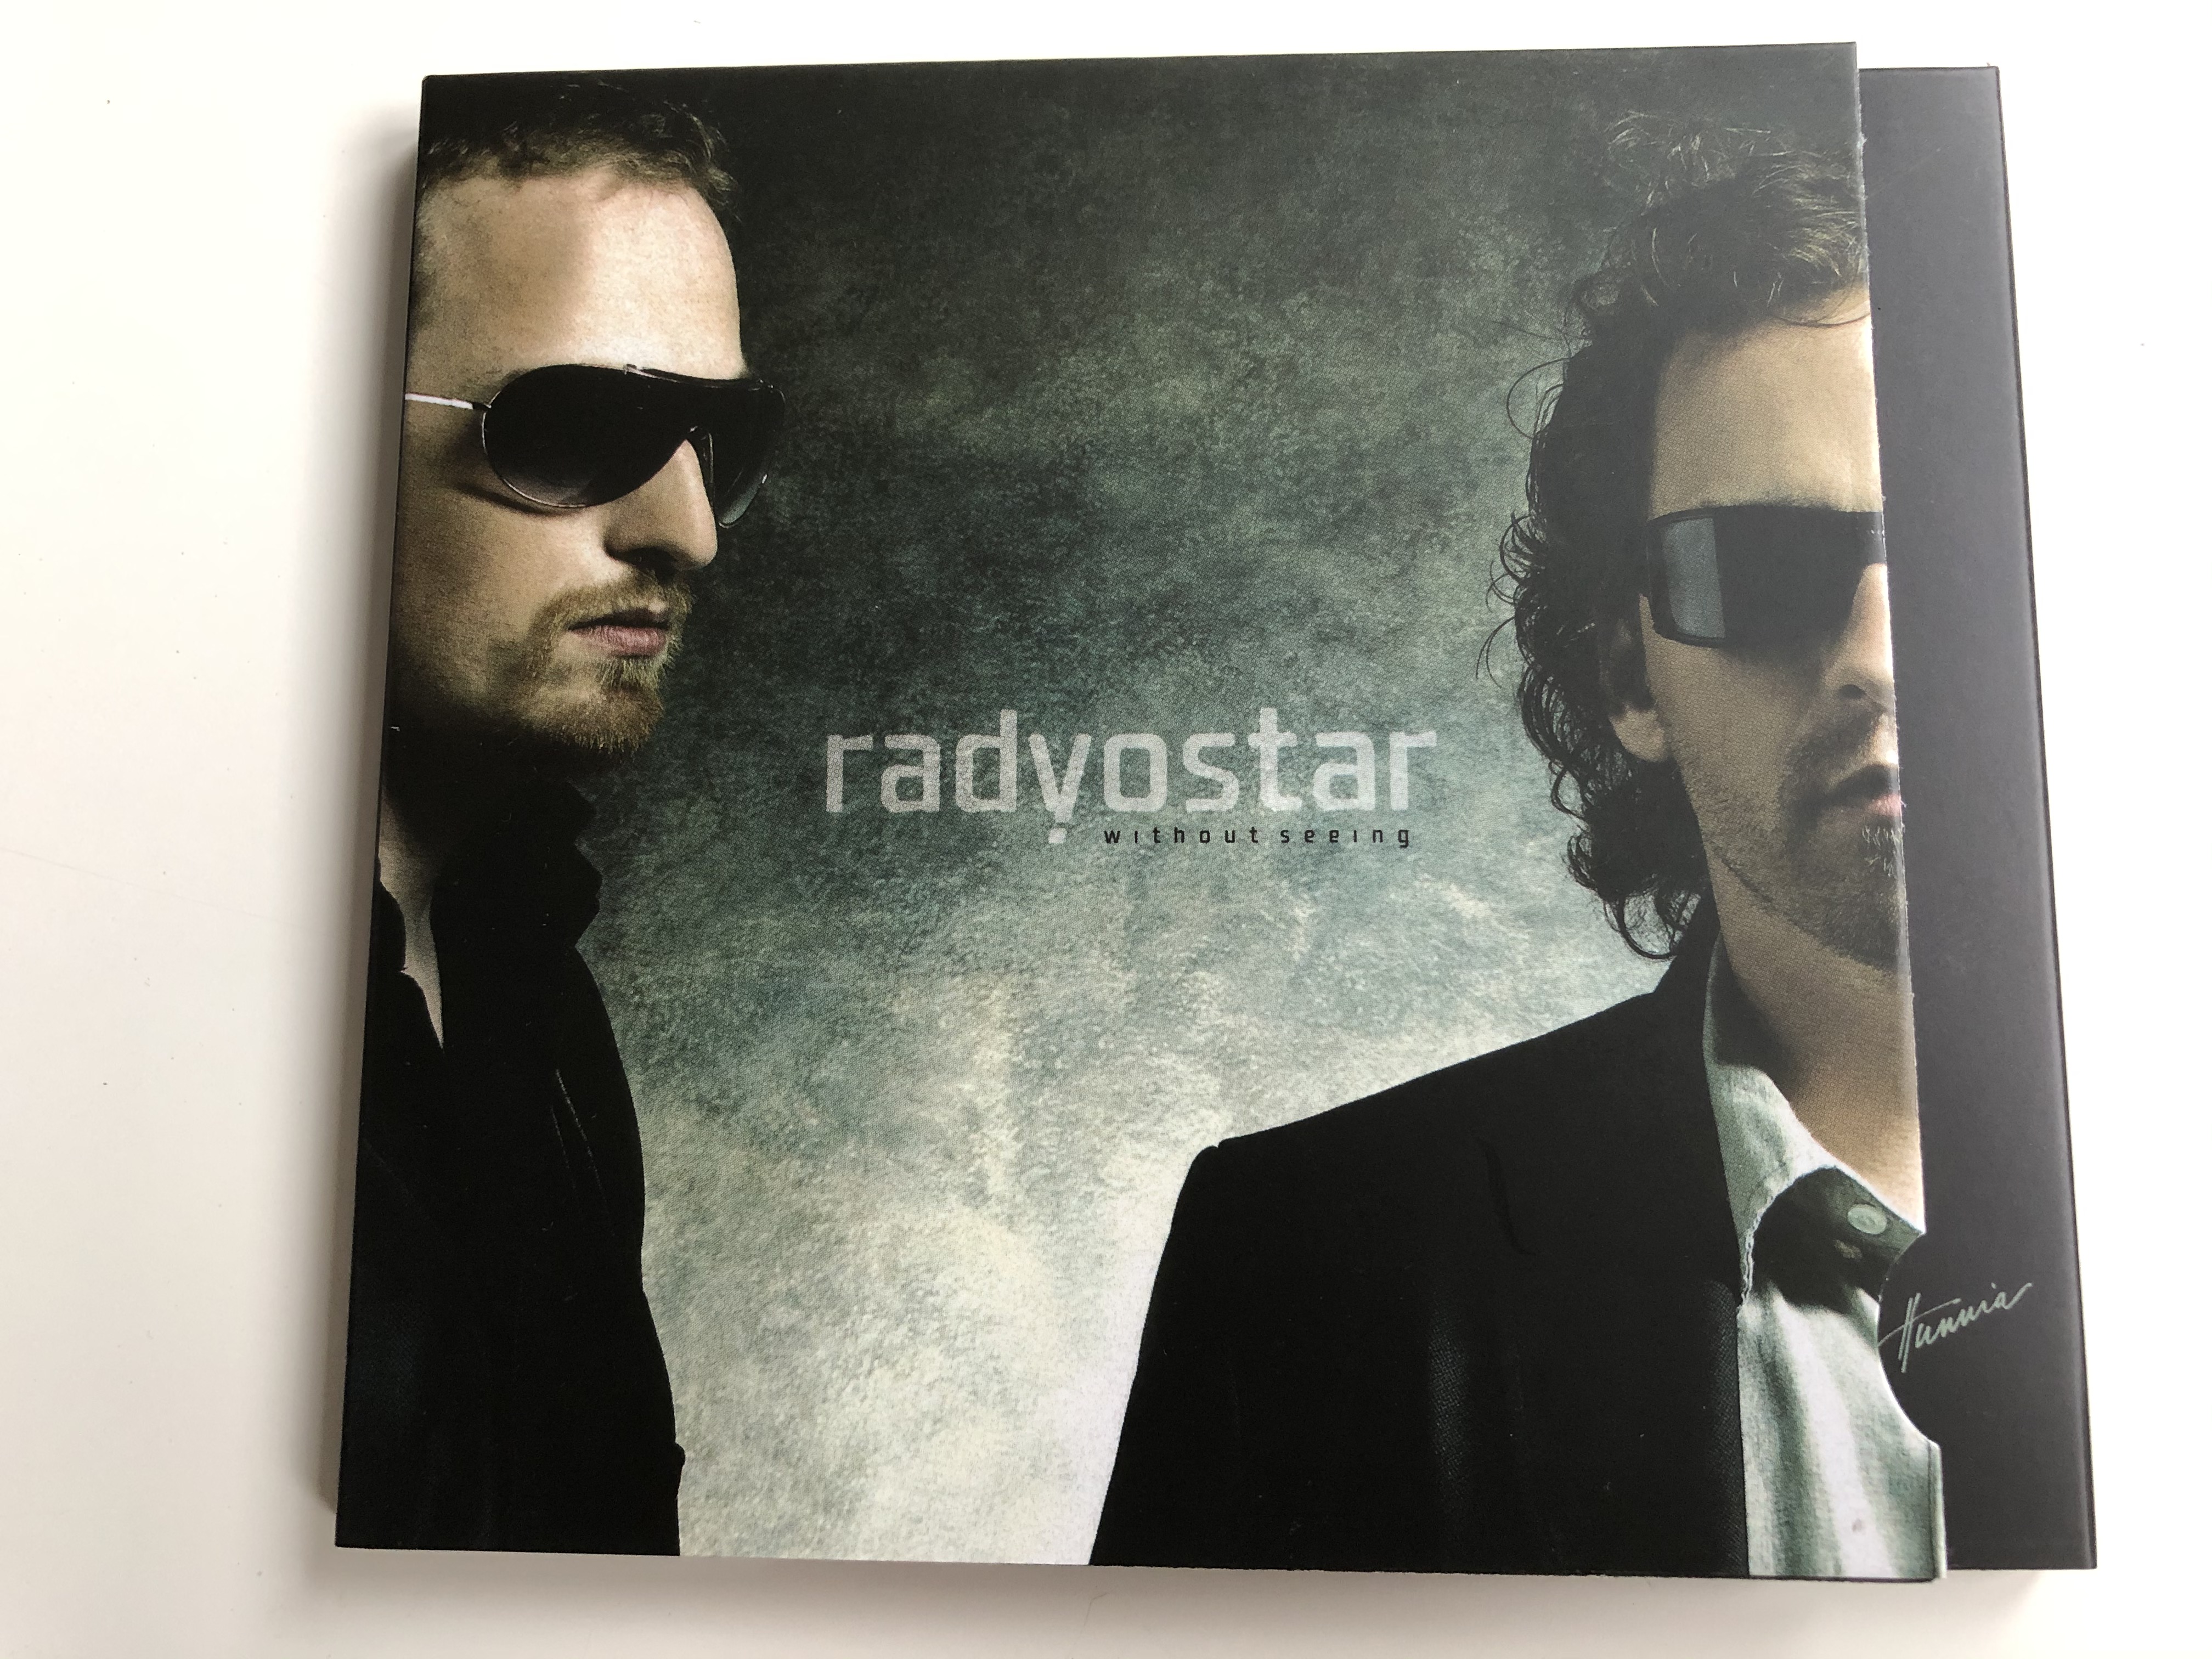 radyostar-without-seeing-hunnia-records-audio-cd-2008-hrcd-803-1-.jpg